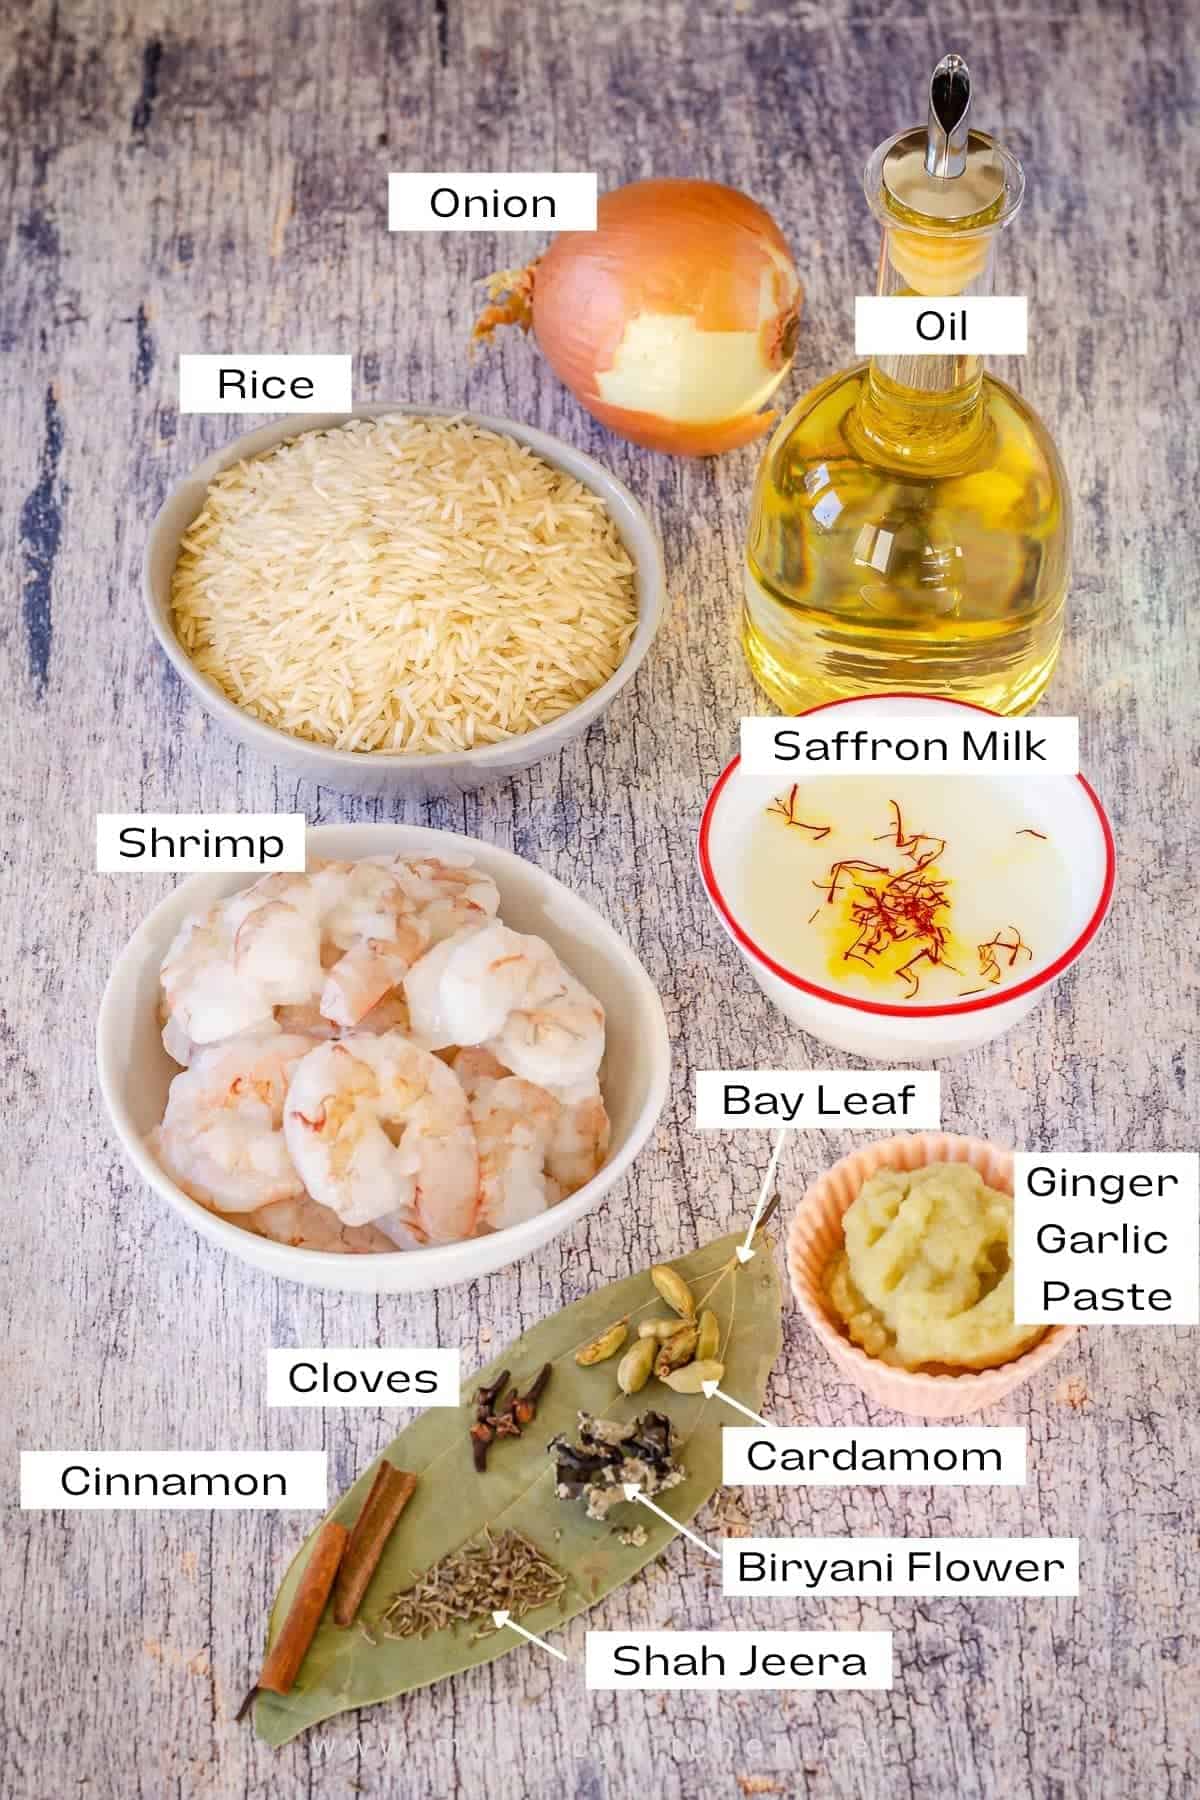 Ingredients for shrimp biryani.